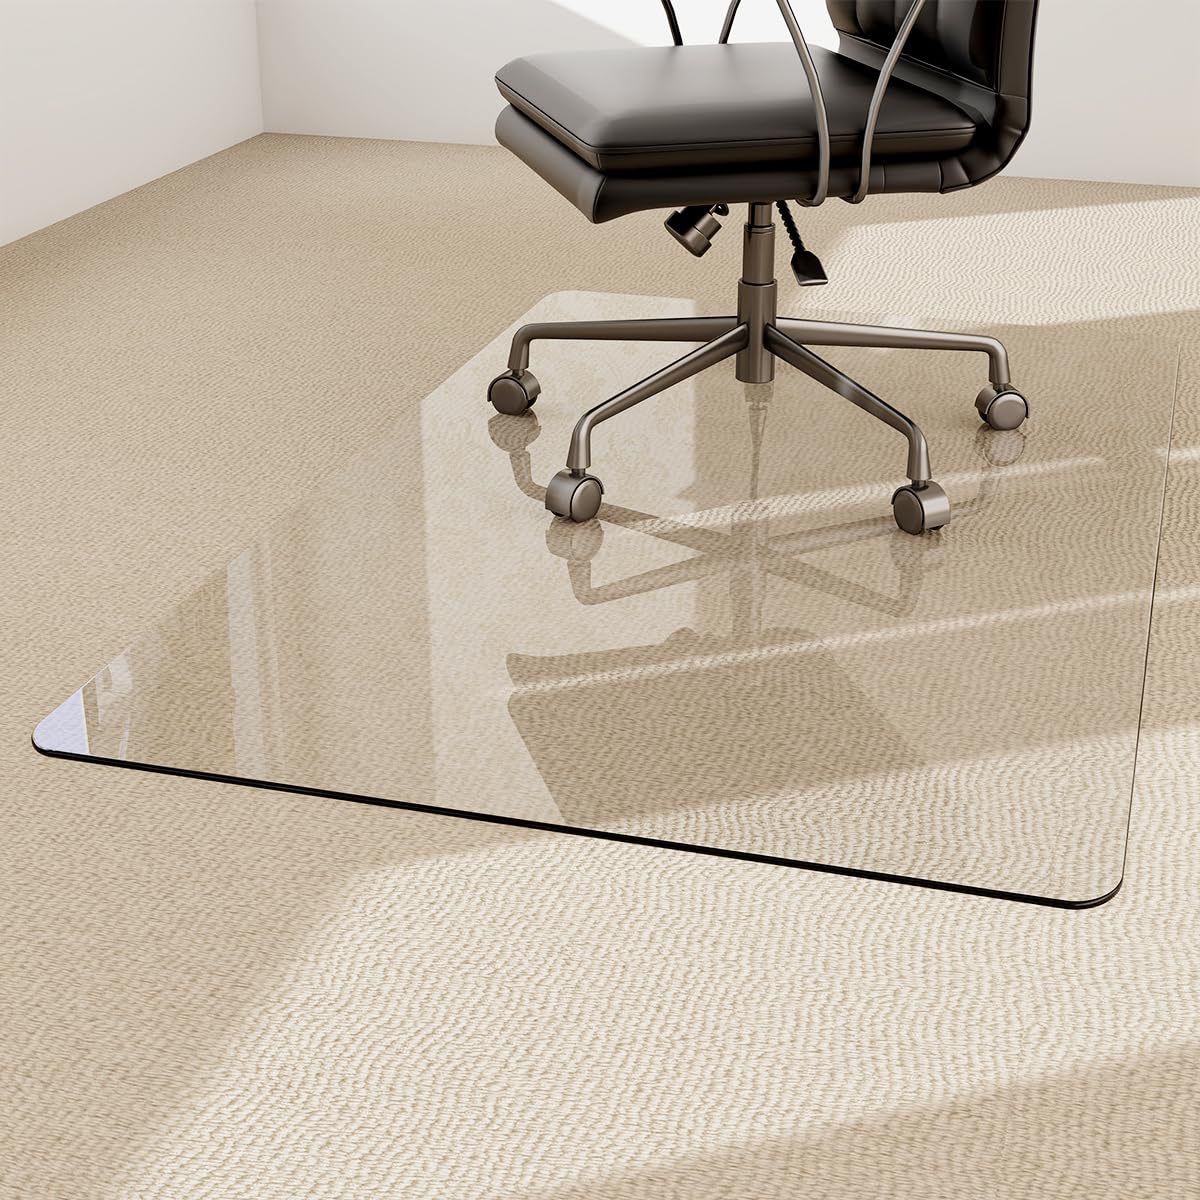 36" x 46" Chair Mat for Carpet - Office Chair Mat - Tempered Glass Floor Mat for Home/Office/Carpet Clear Computer Floor Mat - with 4 Anti-Slip Pads